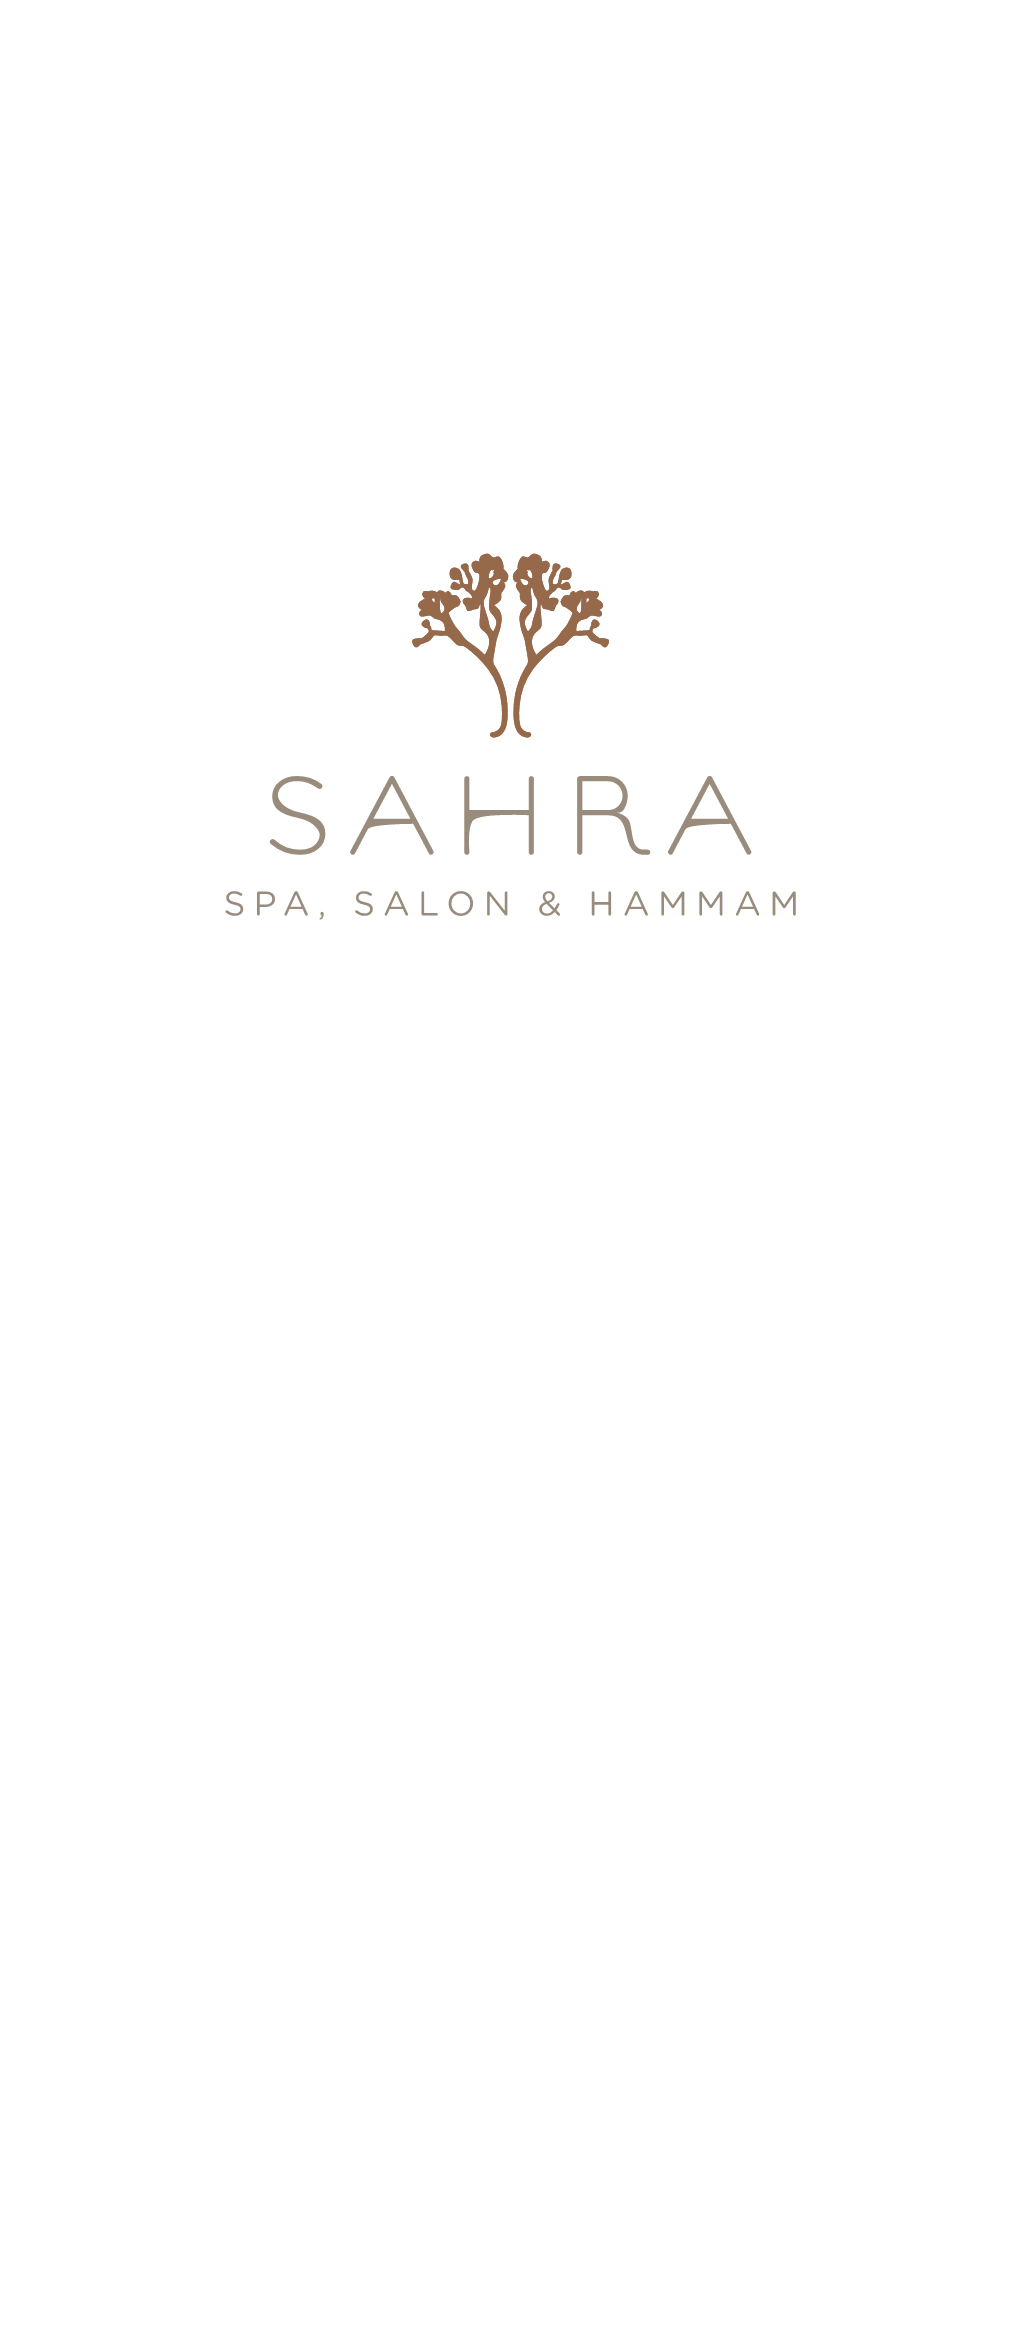 Sahra-Spa Salon- Hammam-11.8